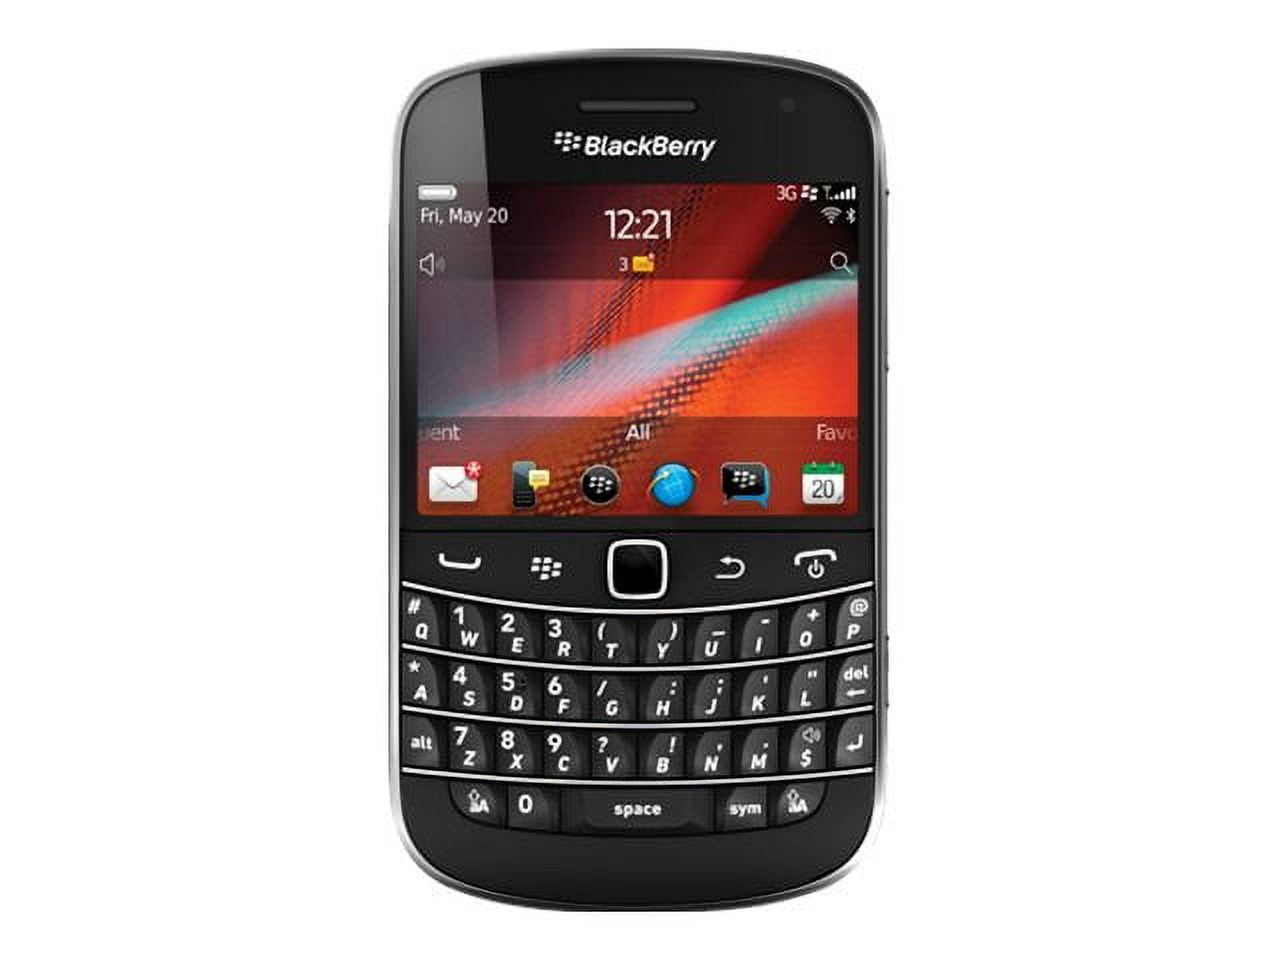 BlackBerry Bold 9900 - 3G BlackBerry smartphone - RAM 768 MB